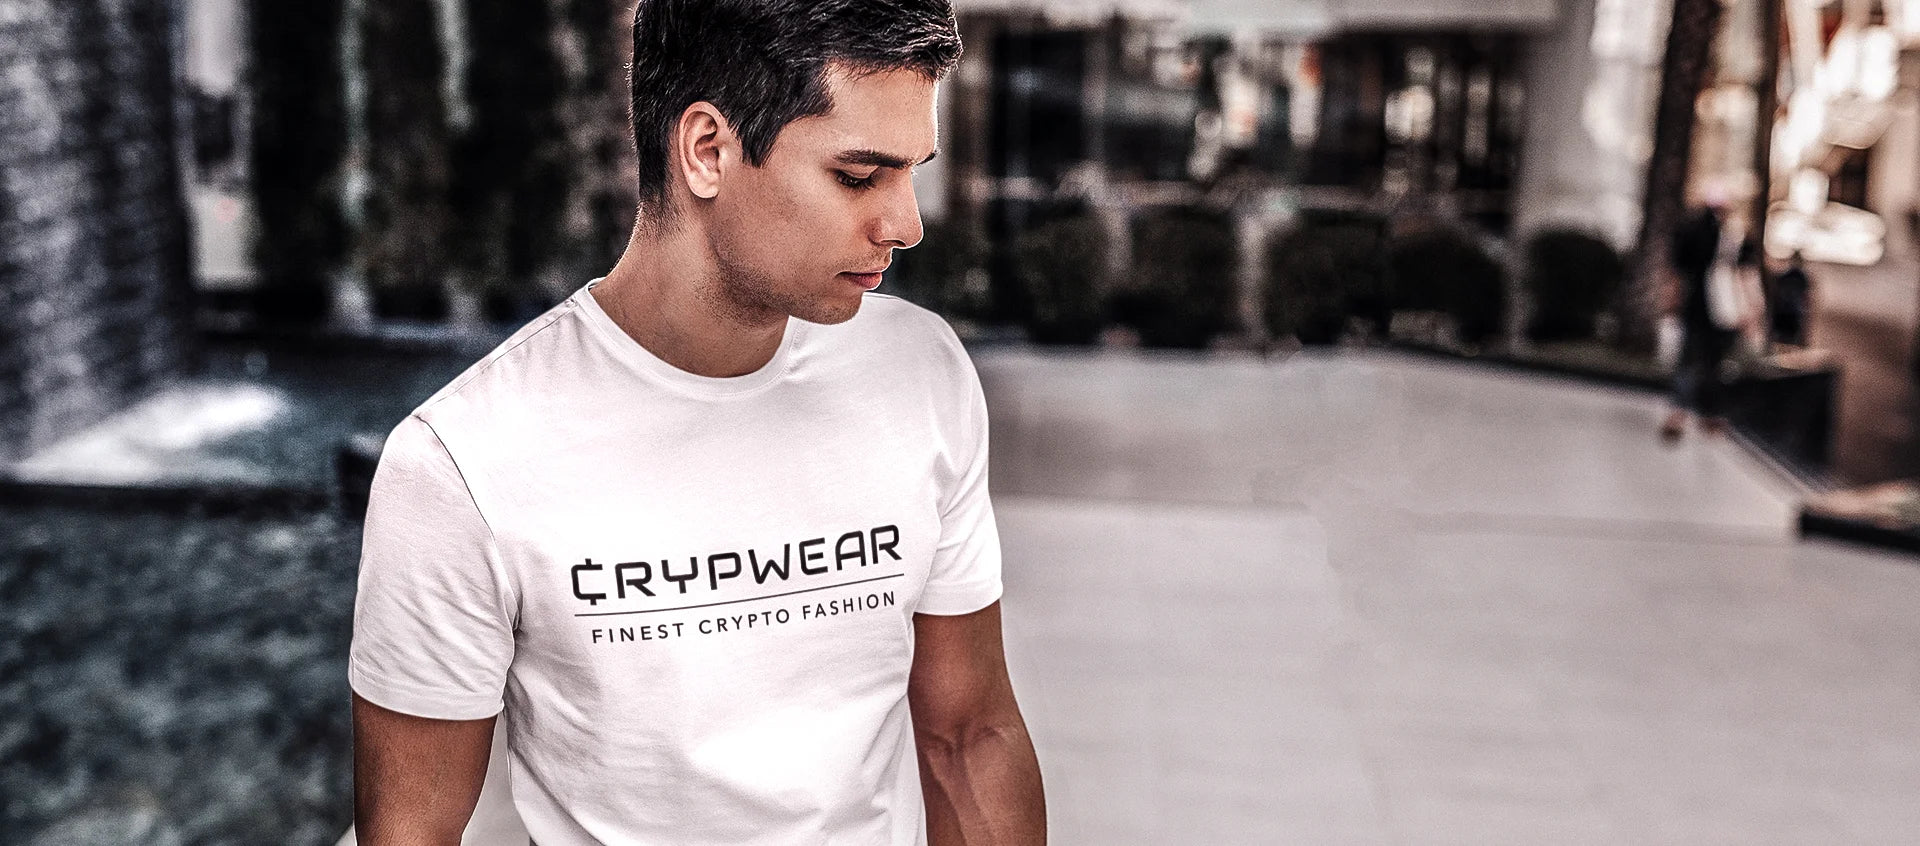 CrypWear Fashion Banner - Male model wearing CrypWear shirt